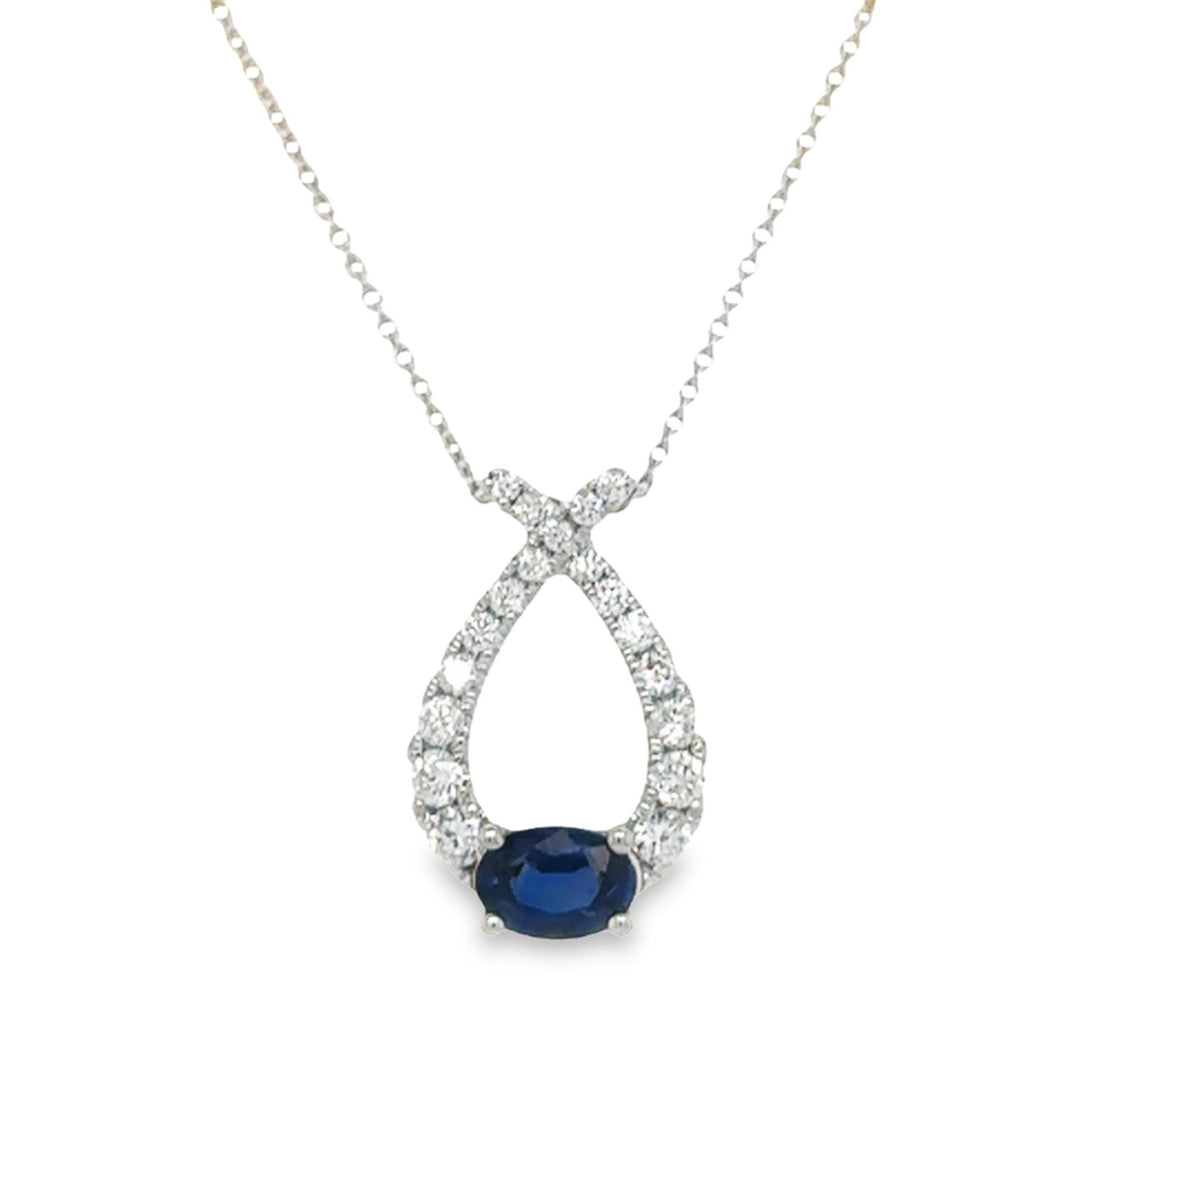 14Kt White Gold Teardrop Gemstone Pendant With Blue Sapphire and Diamonds